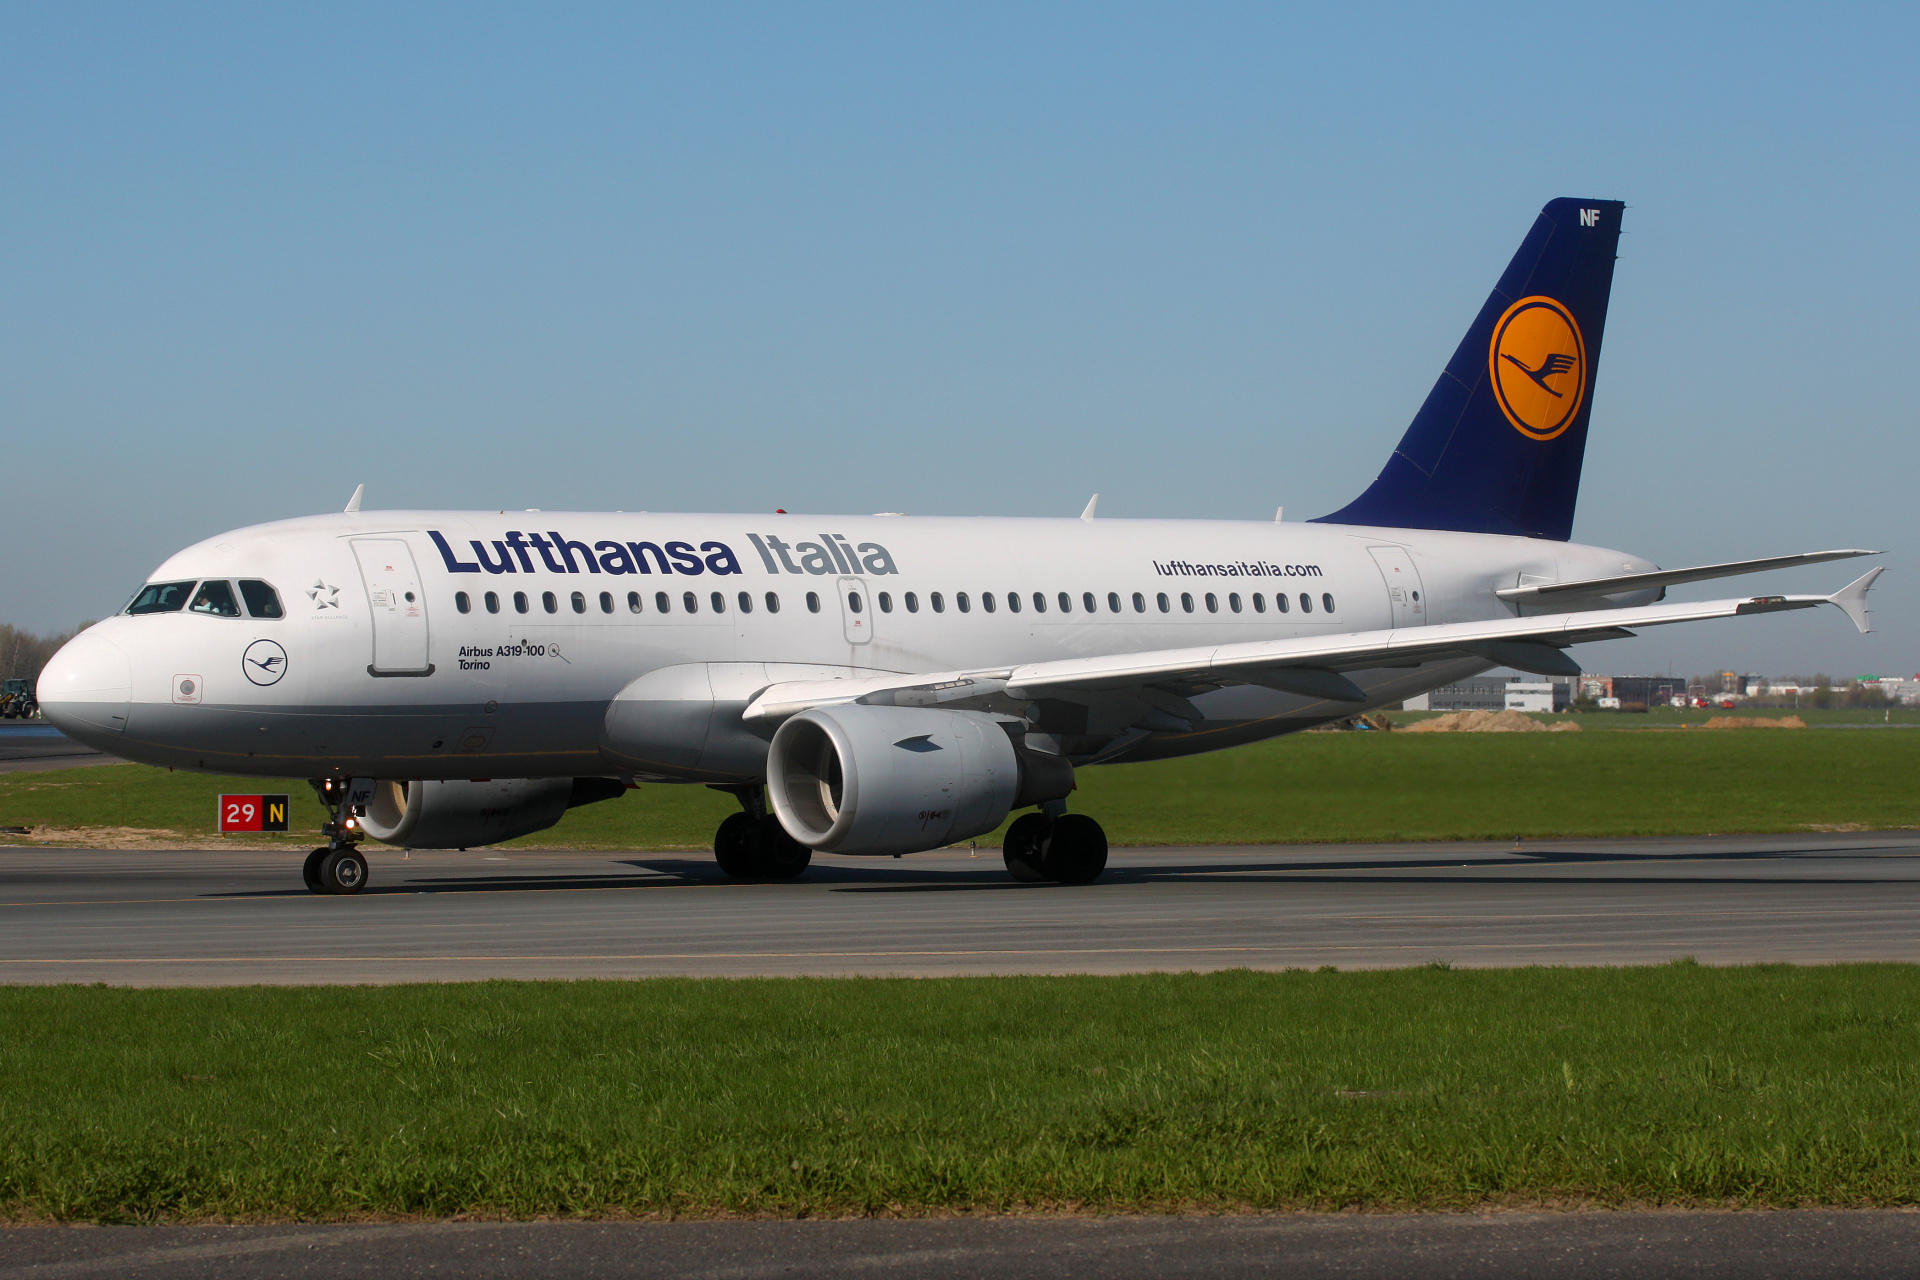 D-AKNF, Lufthansa Italia (Aircraft » EPWA Spotting » Airbus A319-100)